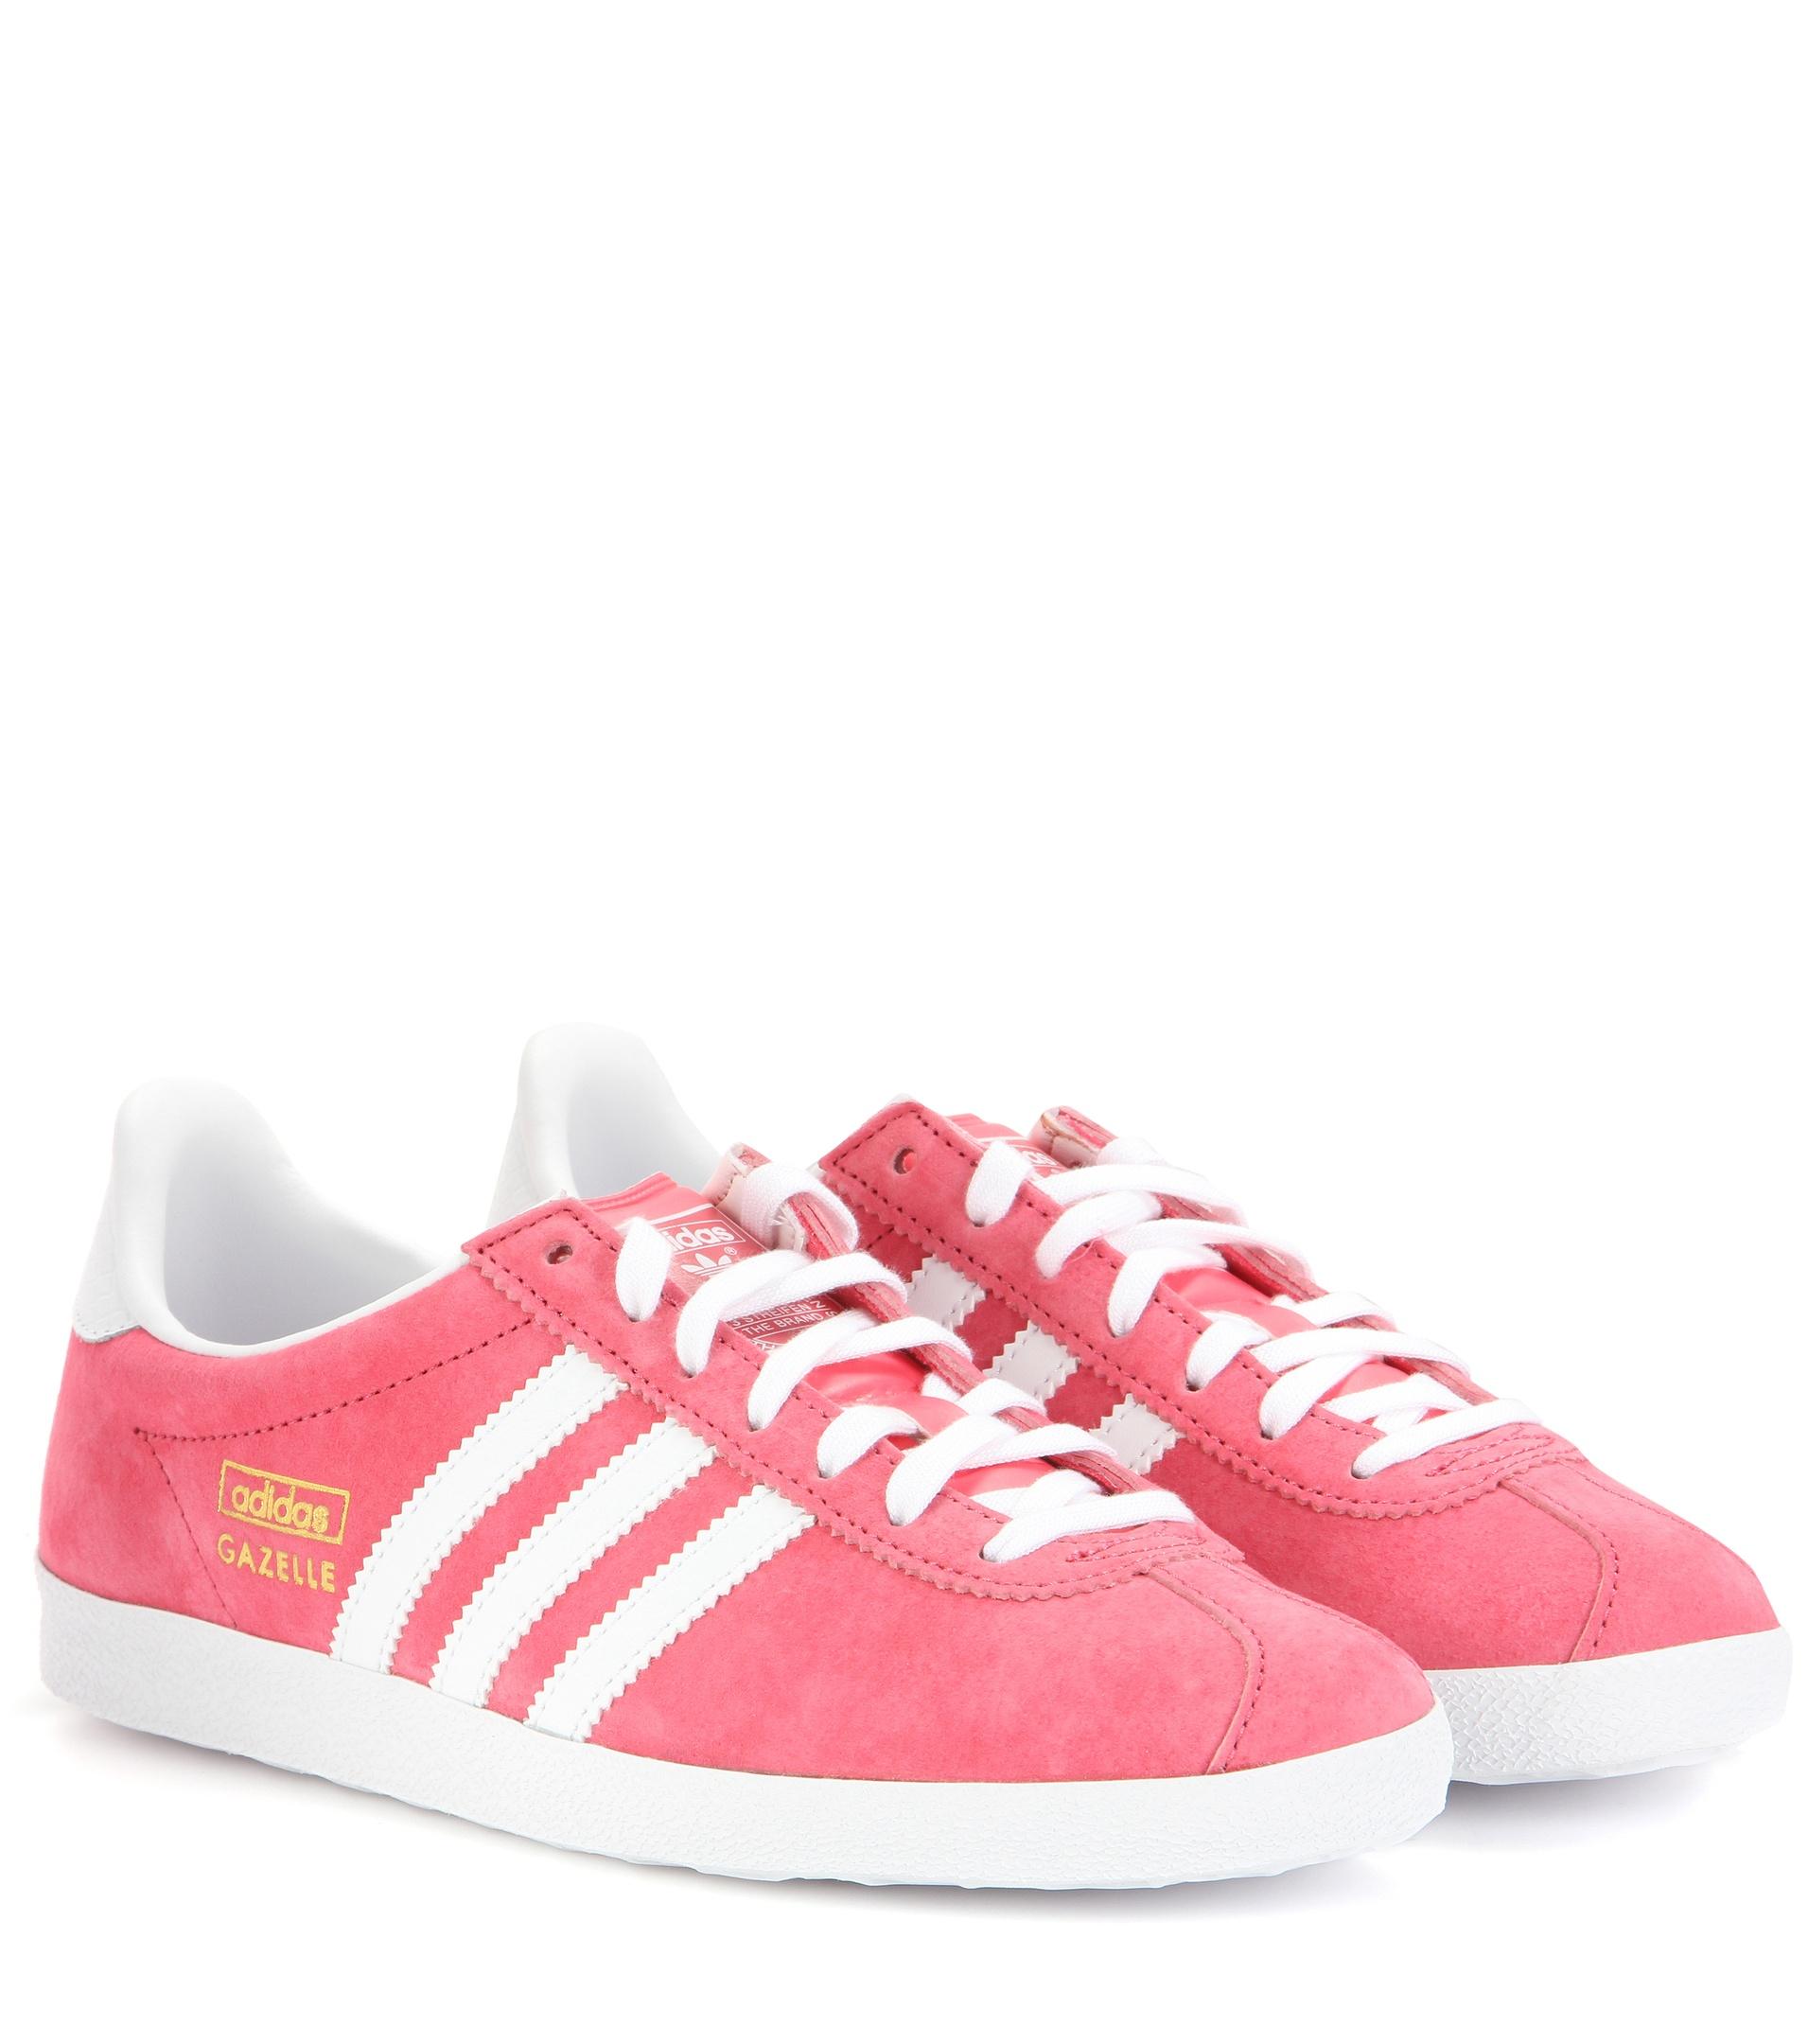 adidas Originals Gazelle Og Suede Sneakers in Pink | Lyst